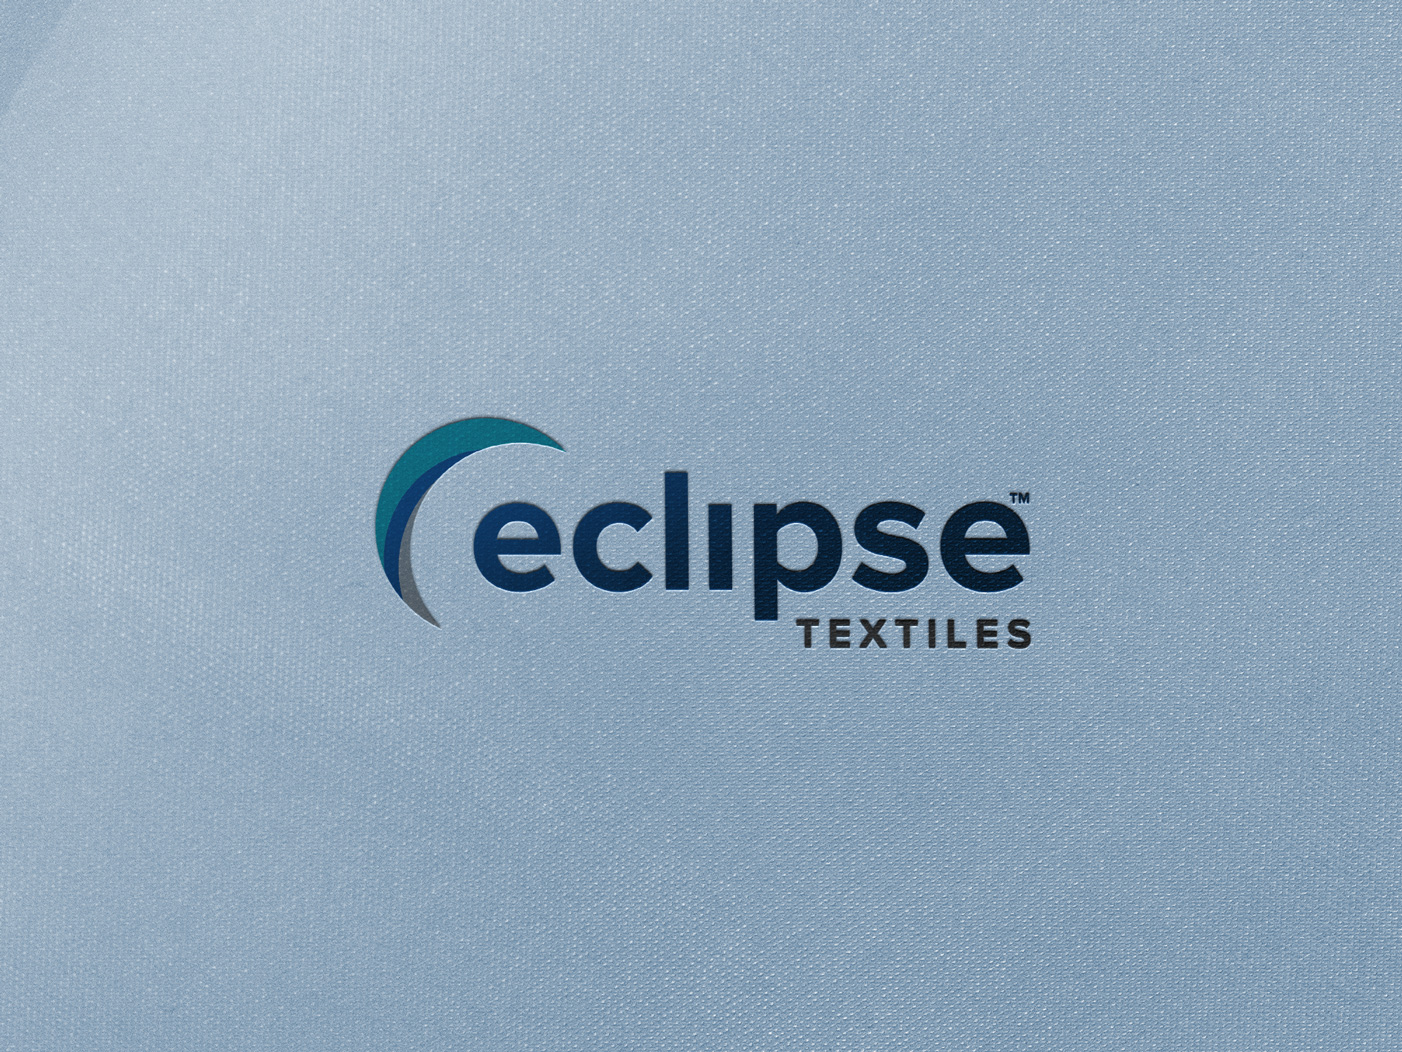 Eclipse-Textiles-Logo-mockup